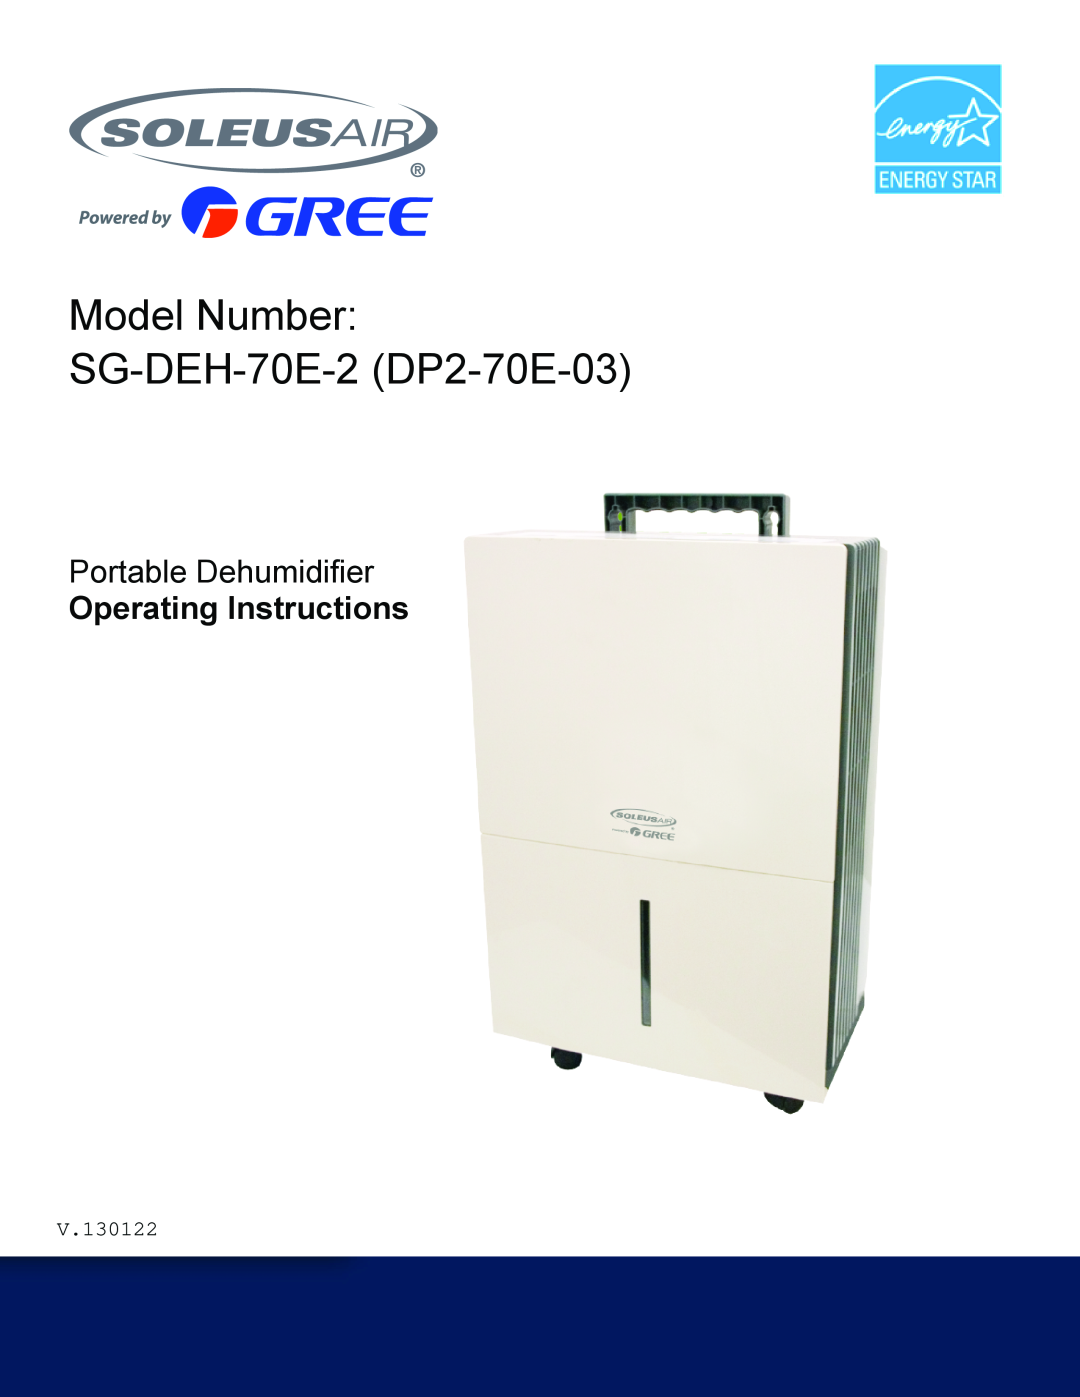 Soleus Air manual Model Number SG-DEH-70E-2 DP2-70E-03, Portable Dehumidifier, Operating Instructions 